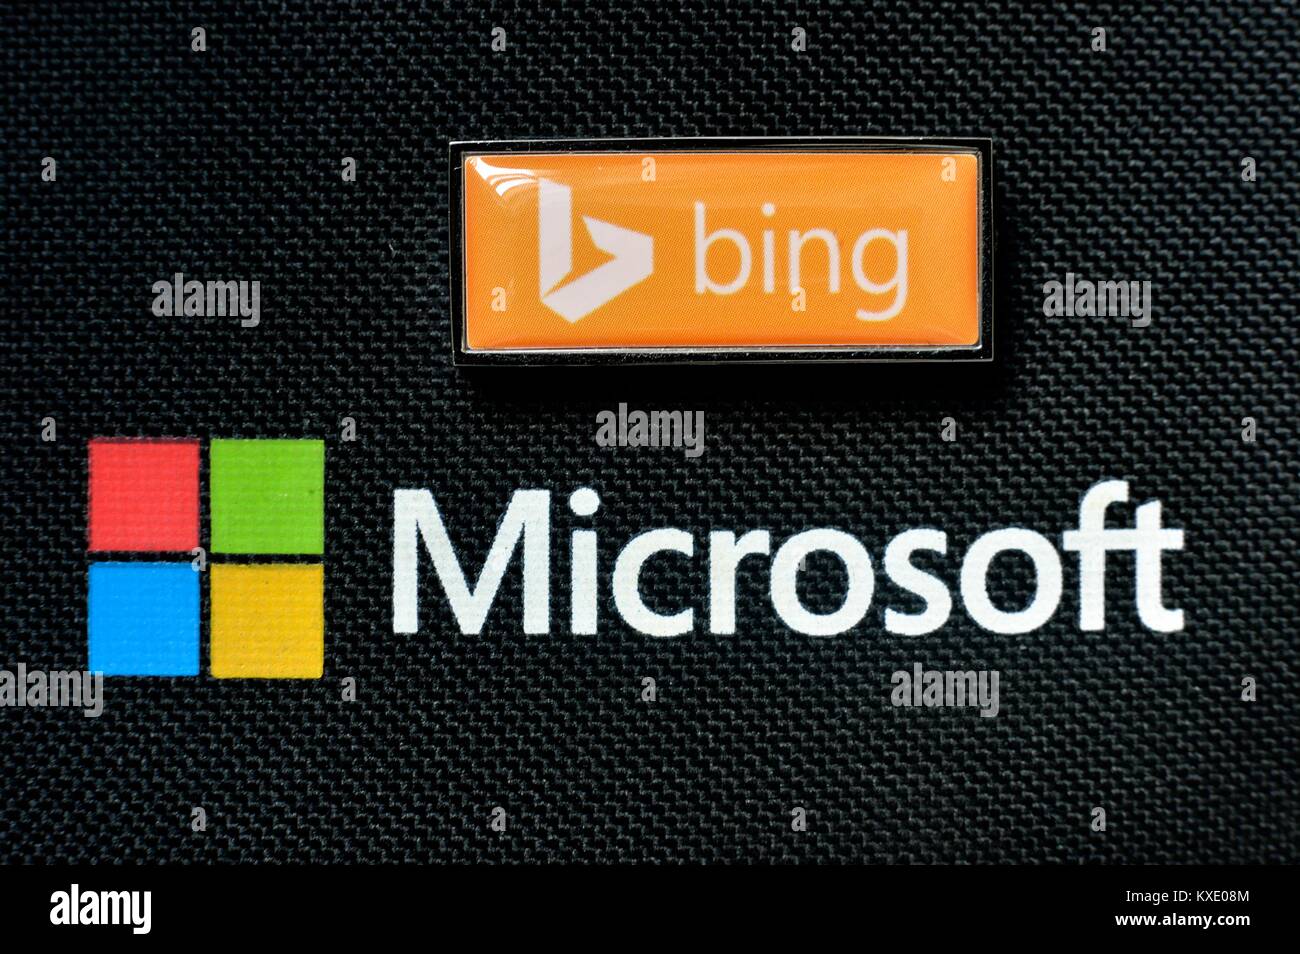 Bing and Microsoft logos Stock Photo